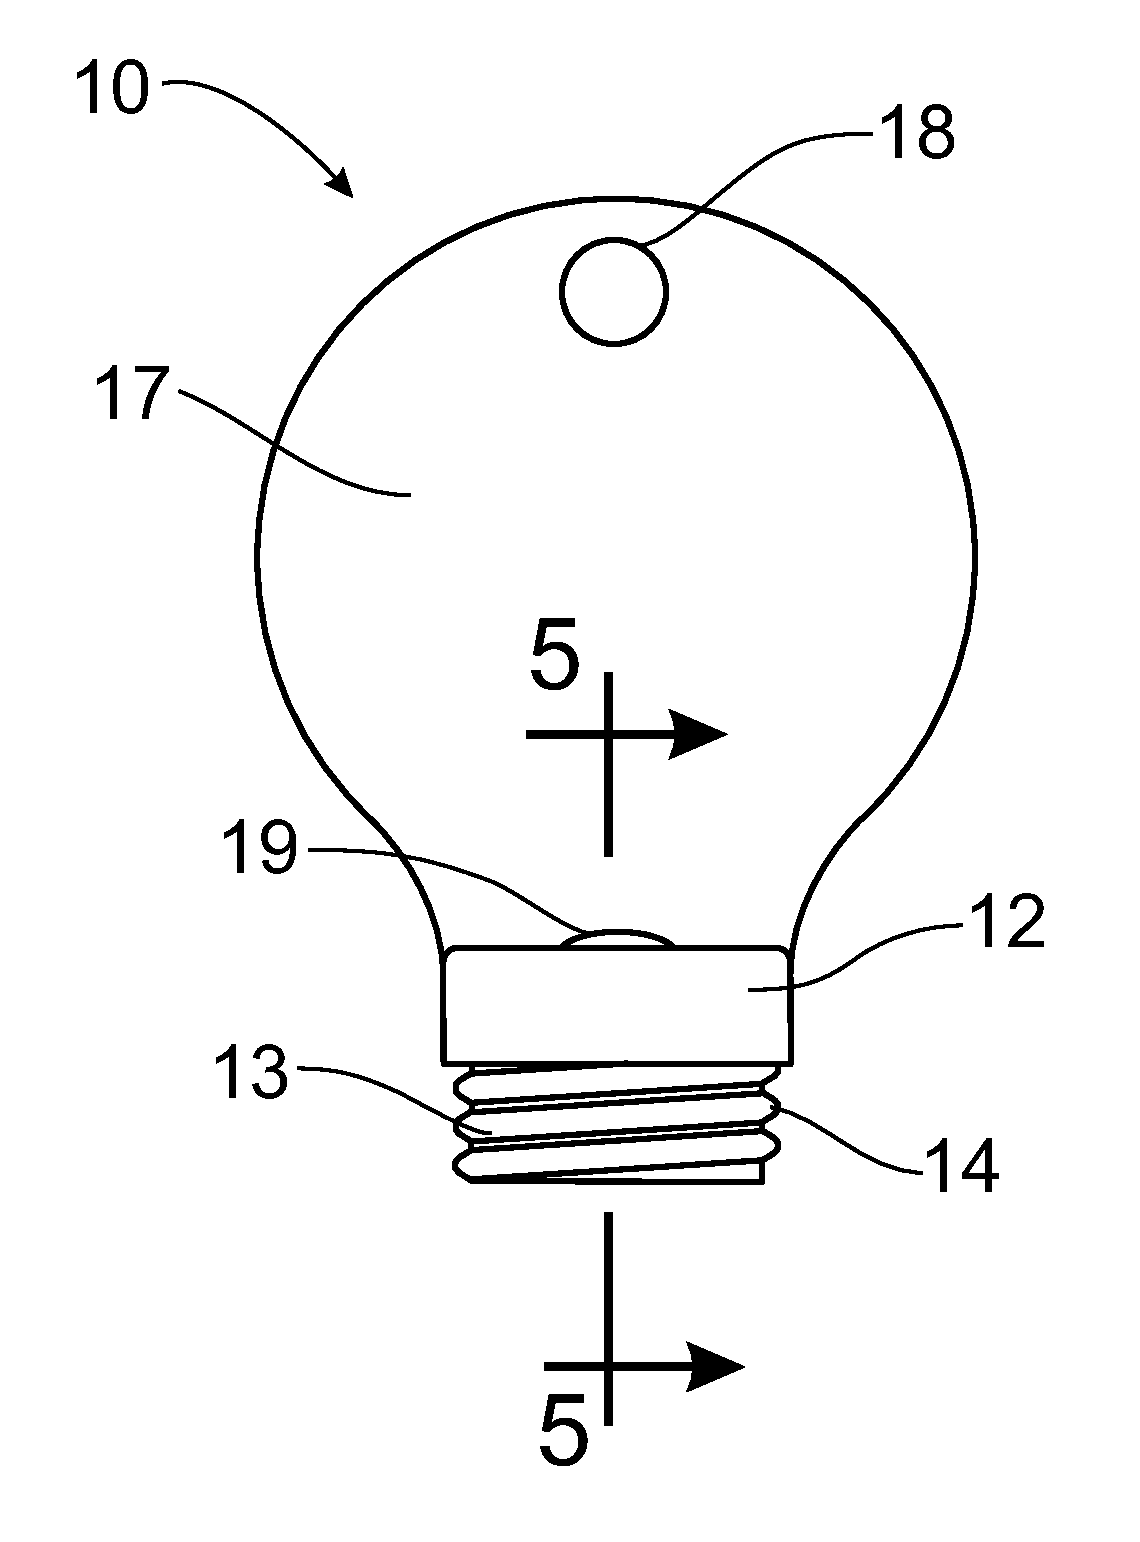 Lighted bottle cap apparatus